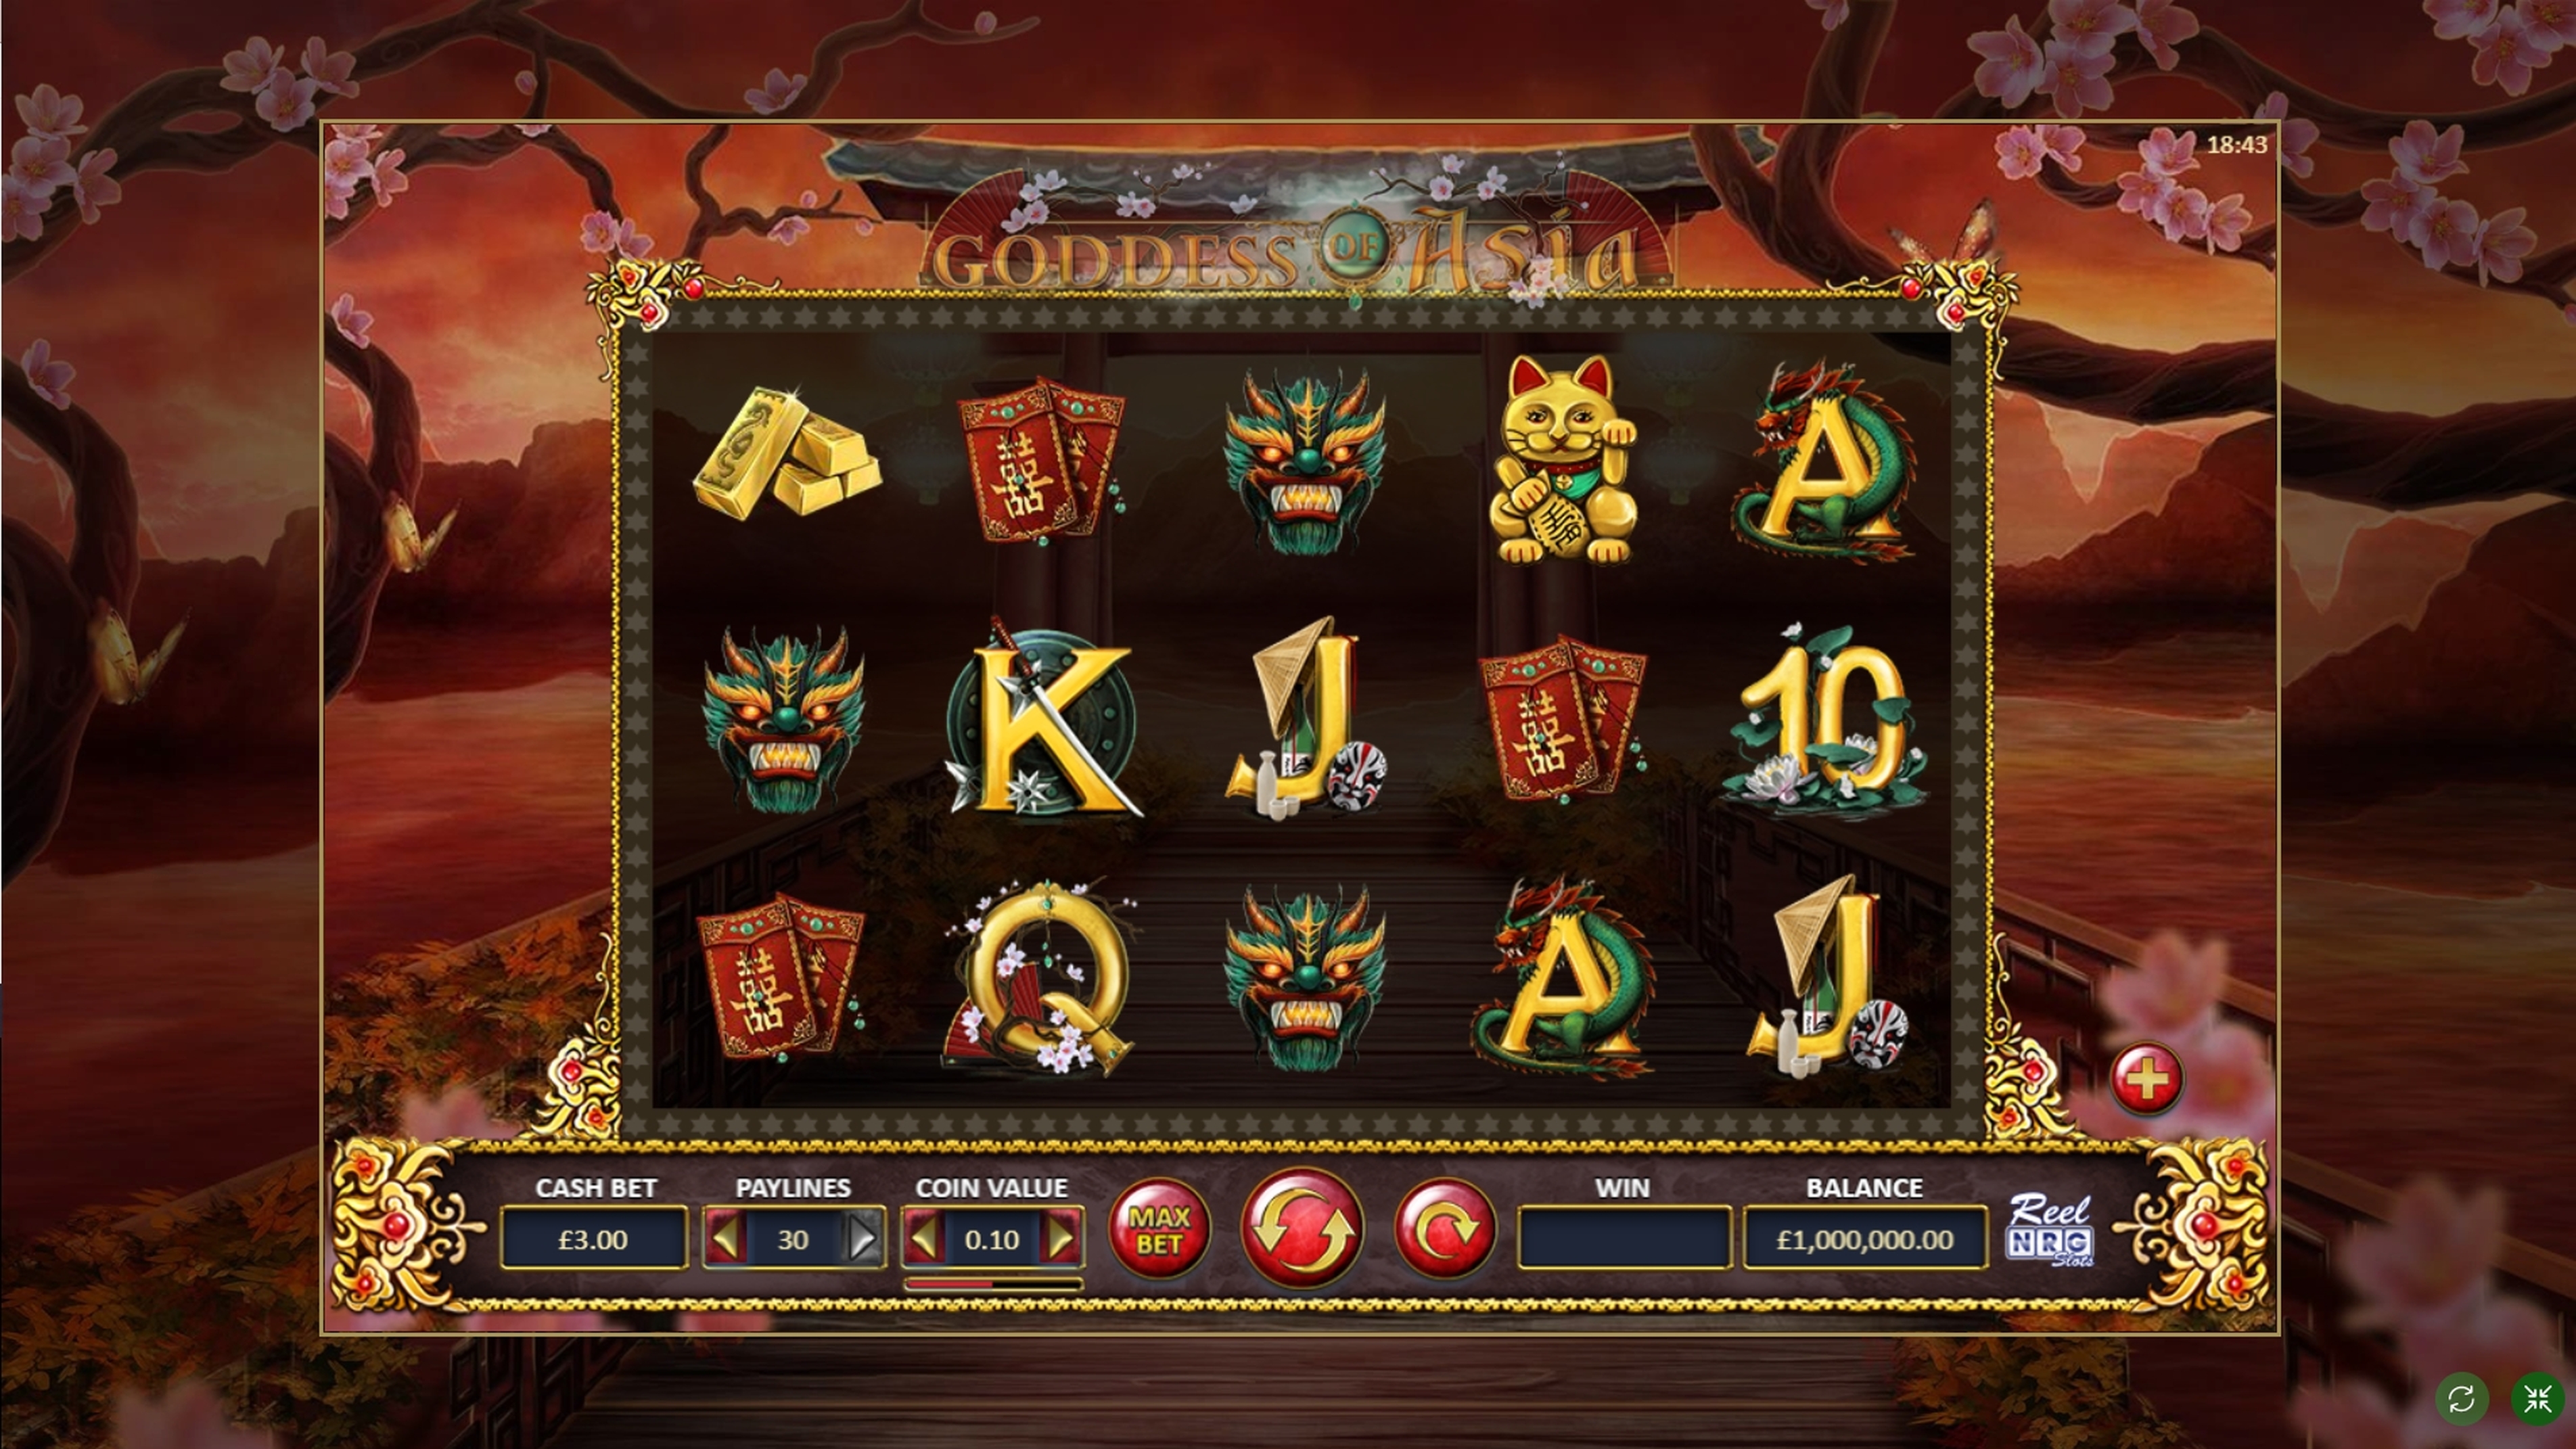 Goddess of Asia demo play, Slot Machine Online by ReelNRG Review | CasinosAnalyzer.com